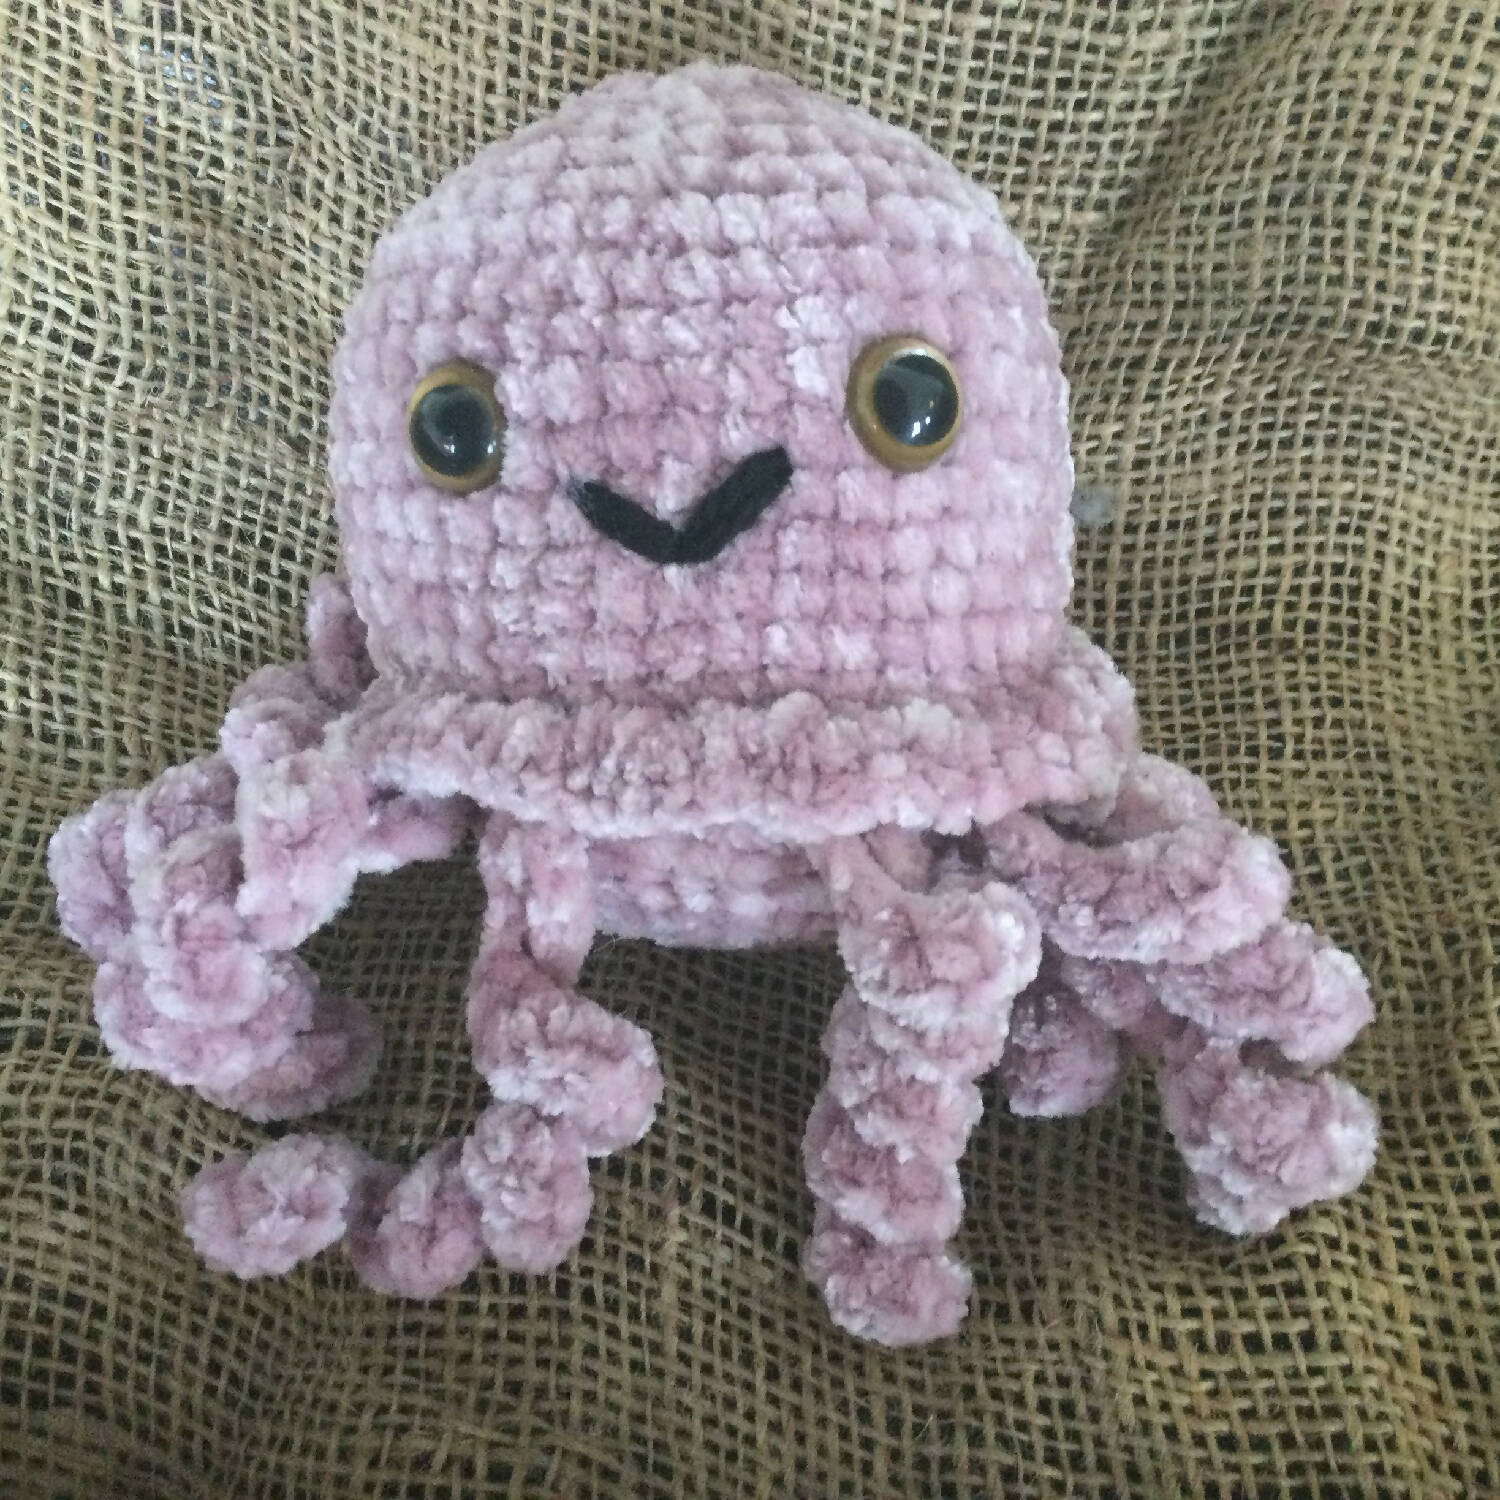 Plush cuddle jellyfish